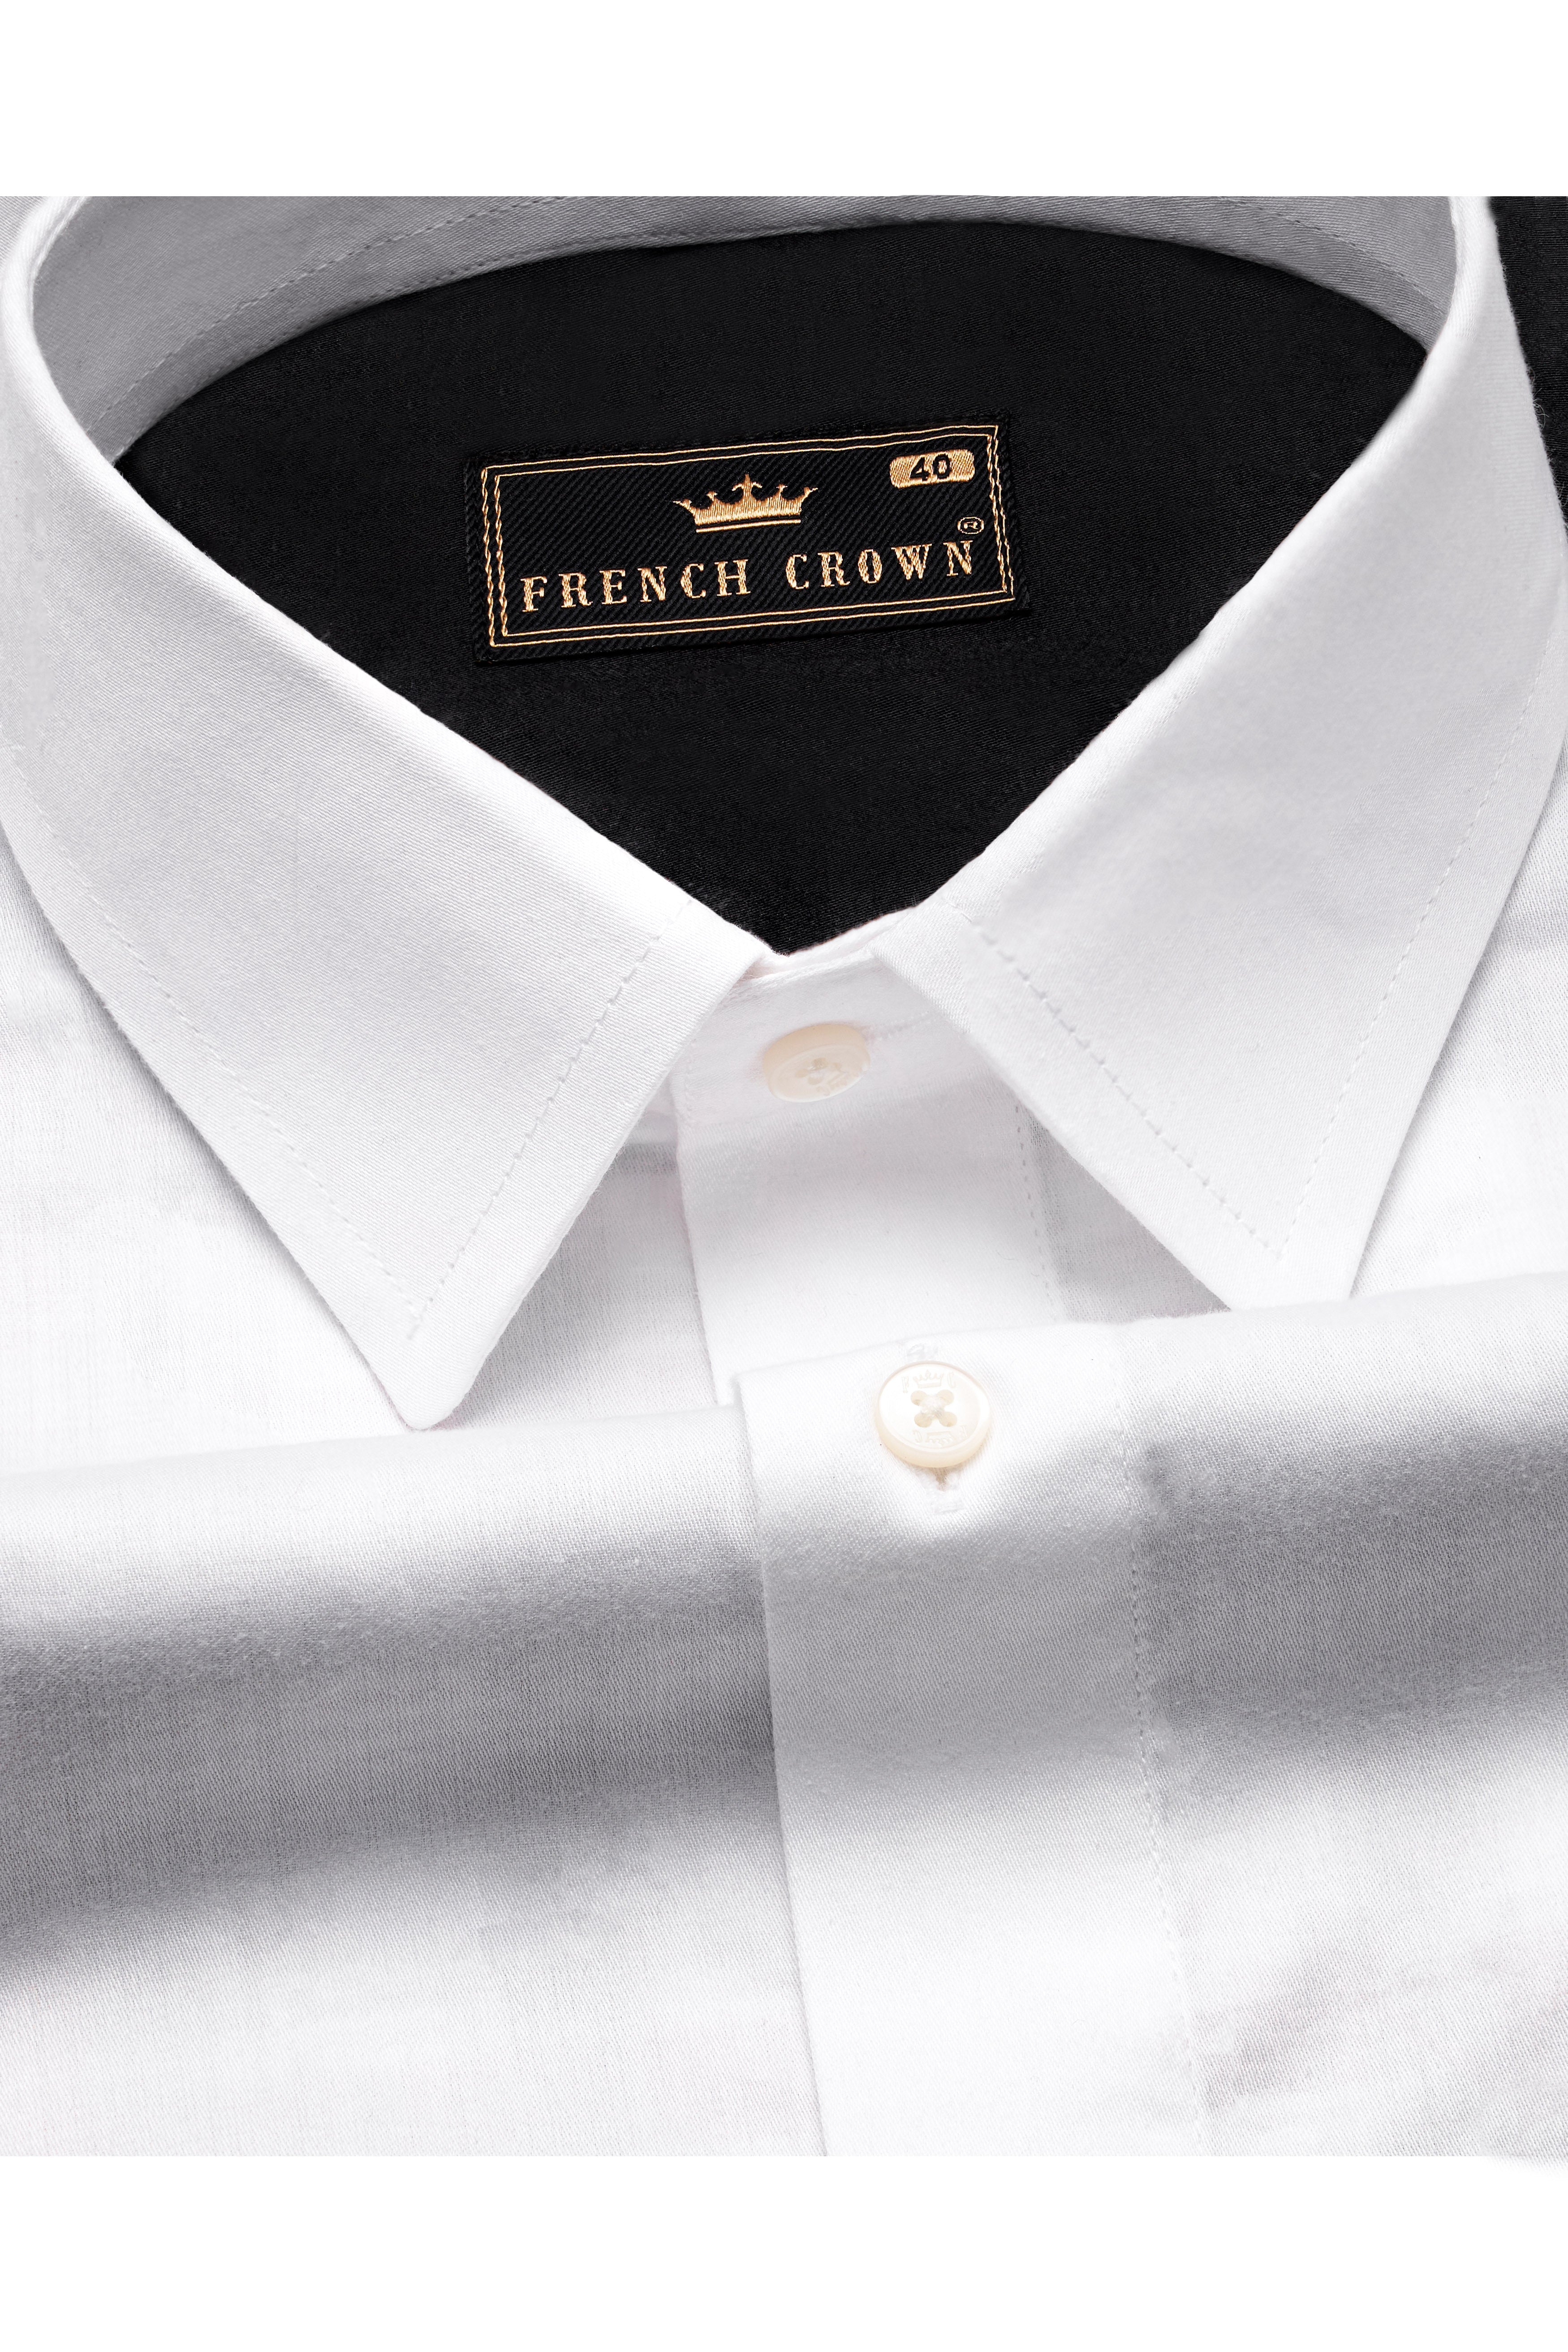 Bright White with Checkered and Embroidered Super Soft Premium Cotton Designer Shirt